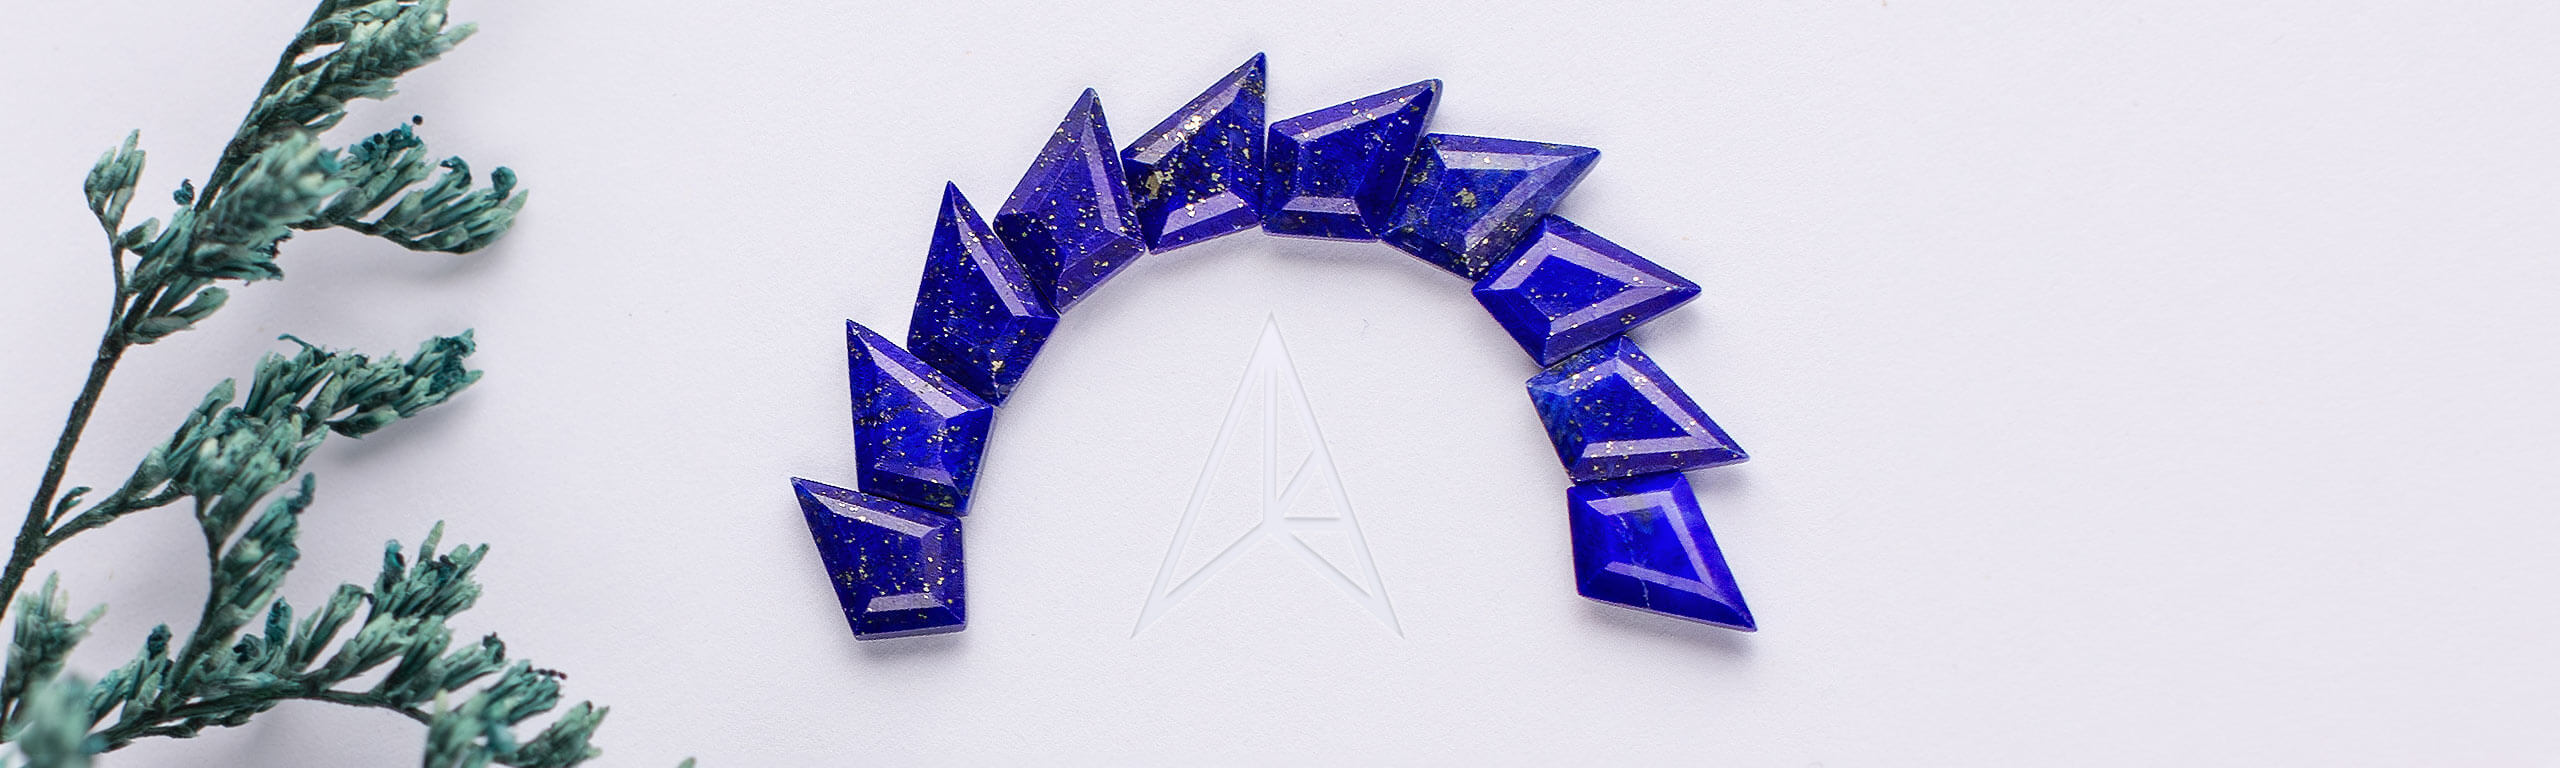 lapis lazuli gemstones in various shapes